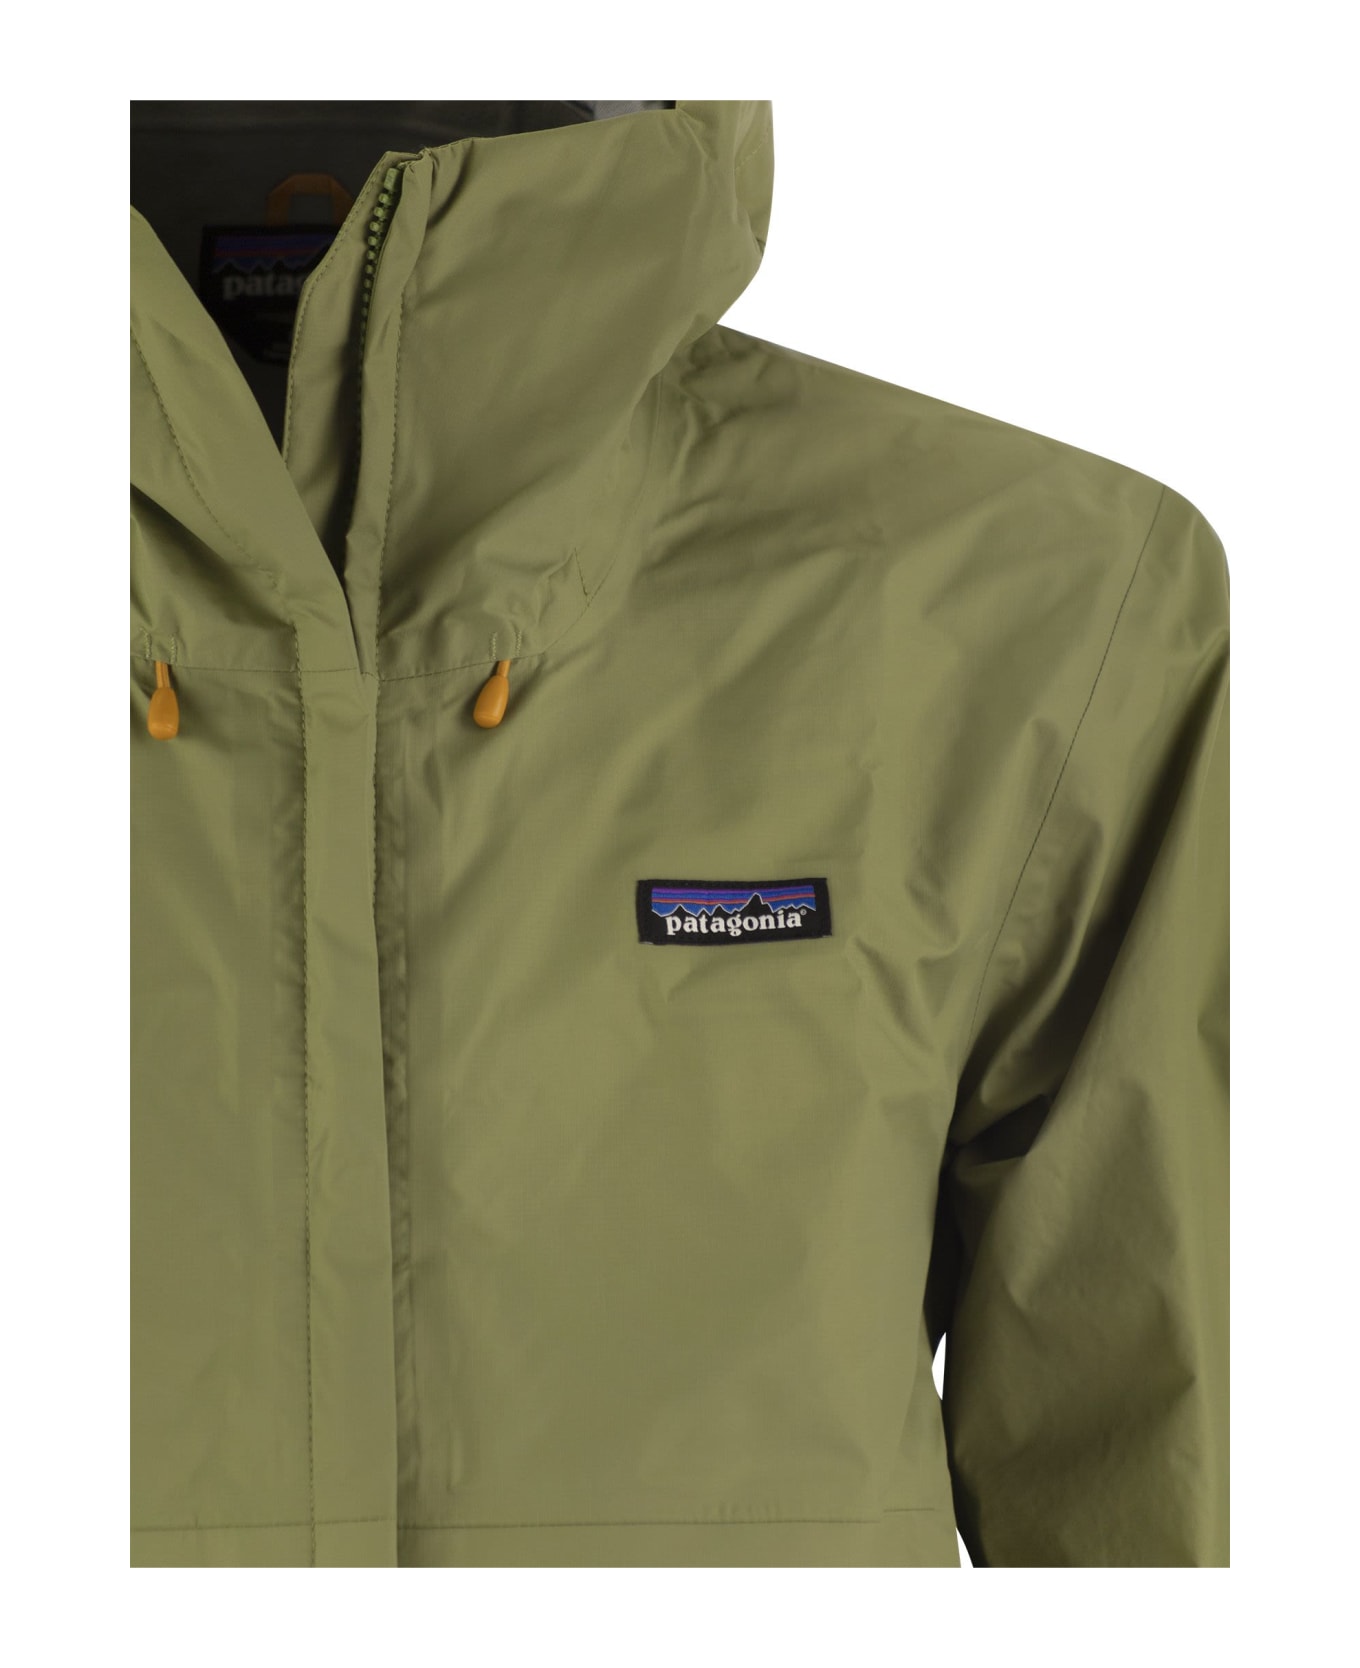 Patagonia Nylon Rainproof Jacket - Bugr